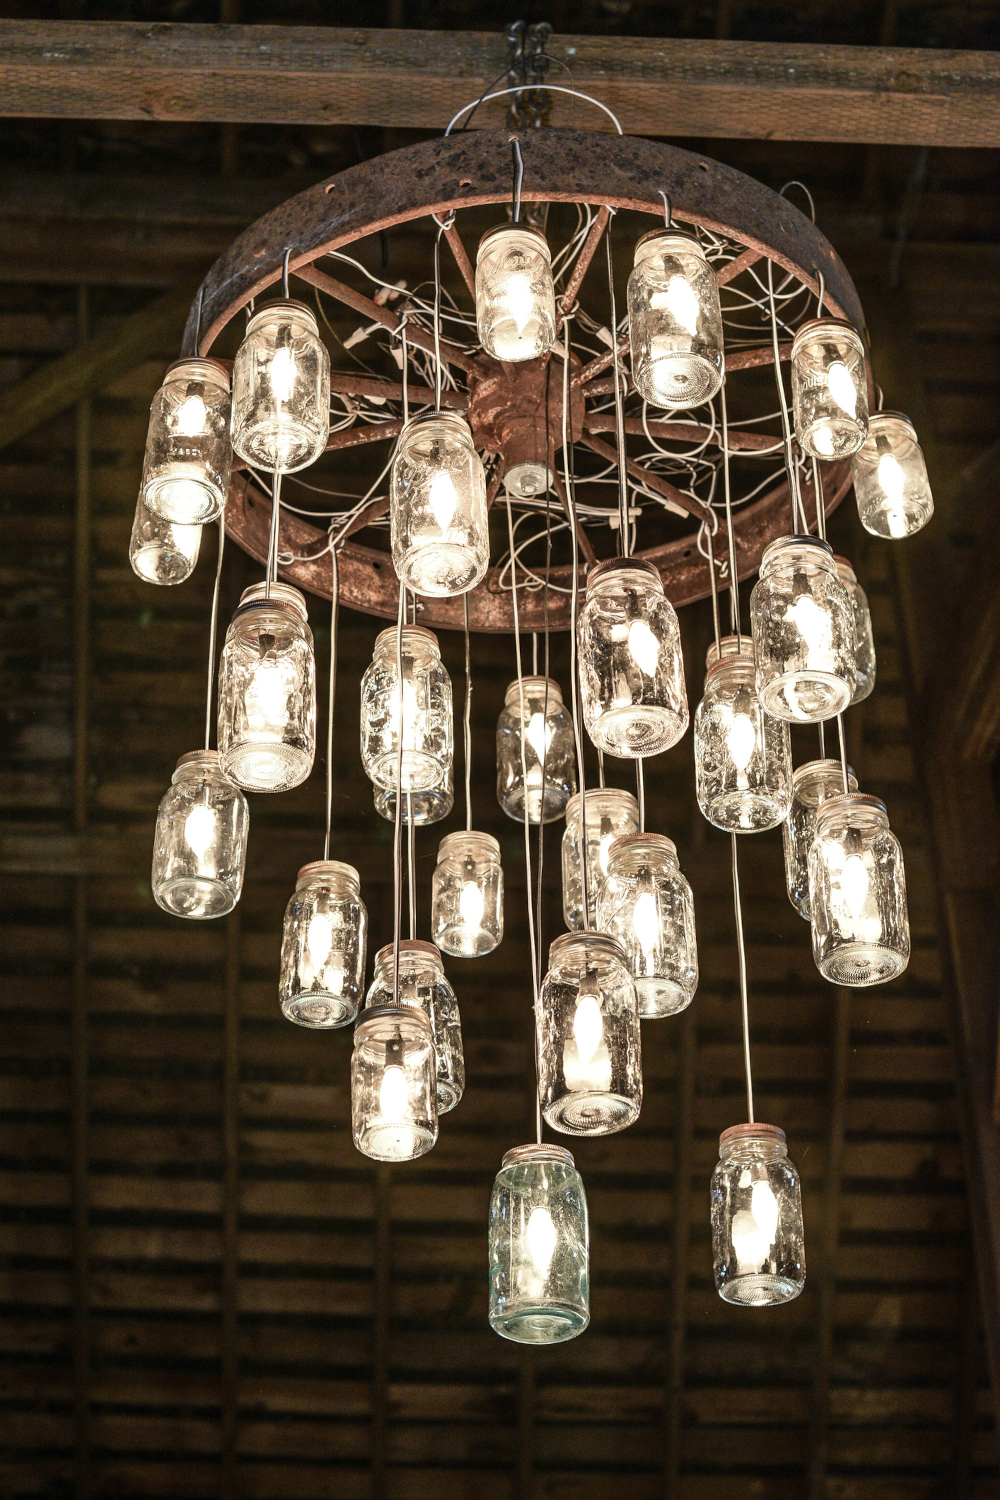 Chandelier - Mason Jar Centerpieces with Lights